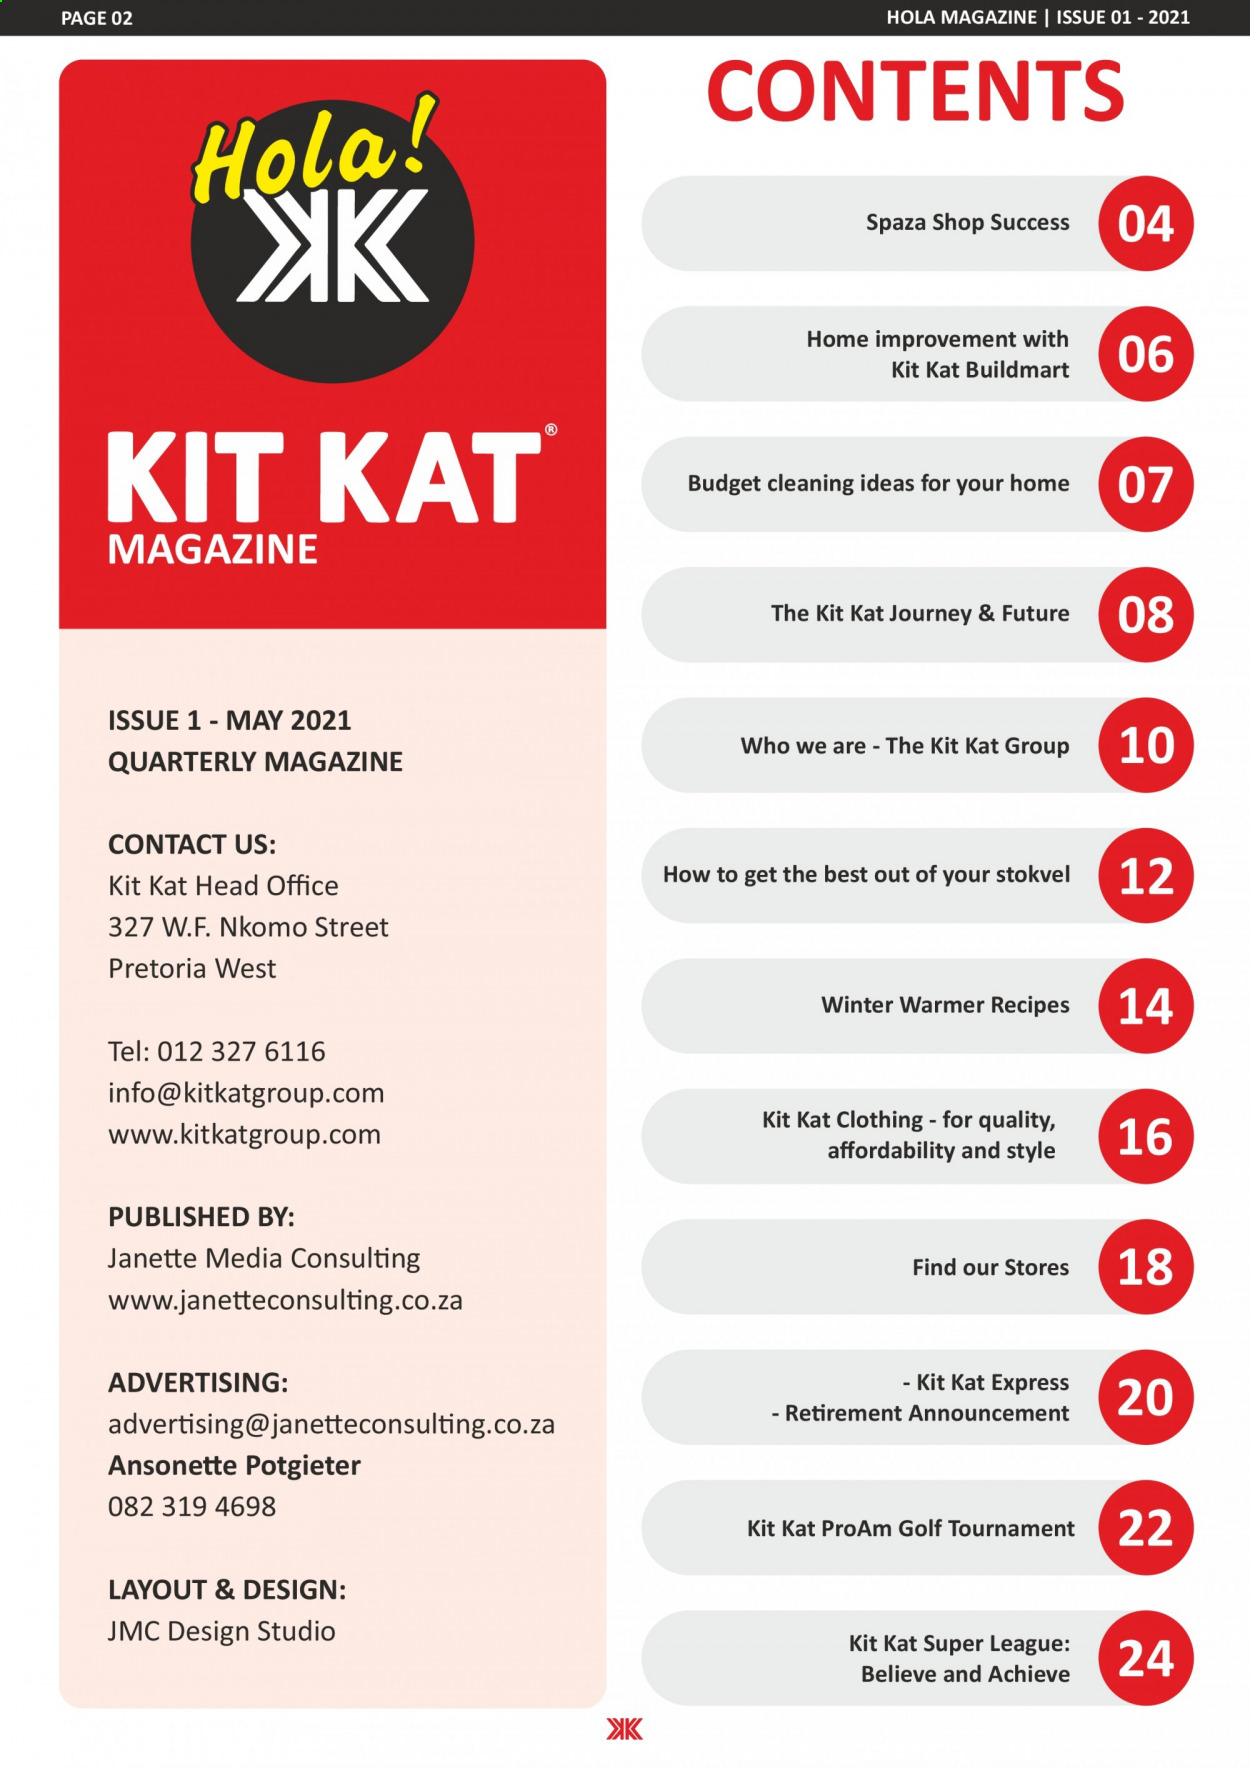 Kit Kat Cash & Carry specials - 05.01.2021 - 05.31.2021. 